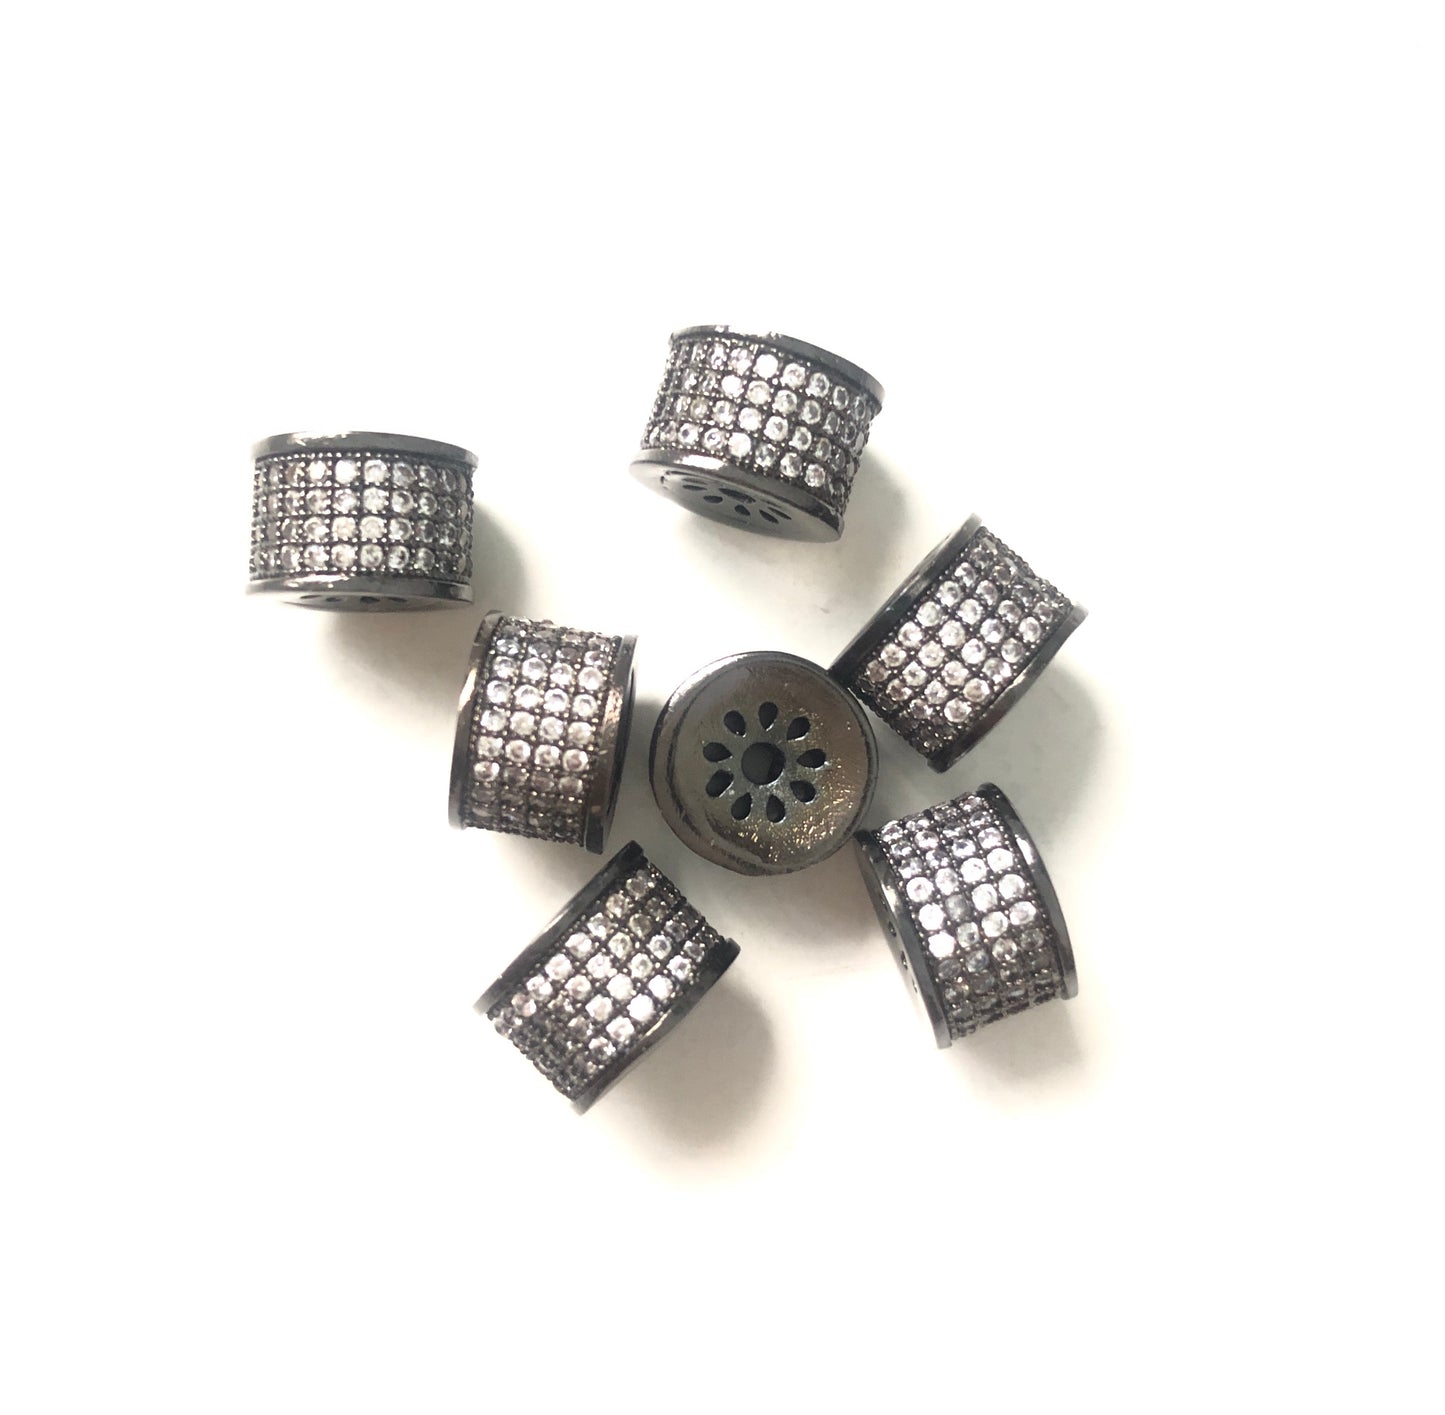 10pcs/lot 9.5*6.5mm CZ Paved Cylinder Rondelle Spacers Black CZ Paved Spacers Rondelle Beads Charms Beads Beyond